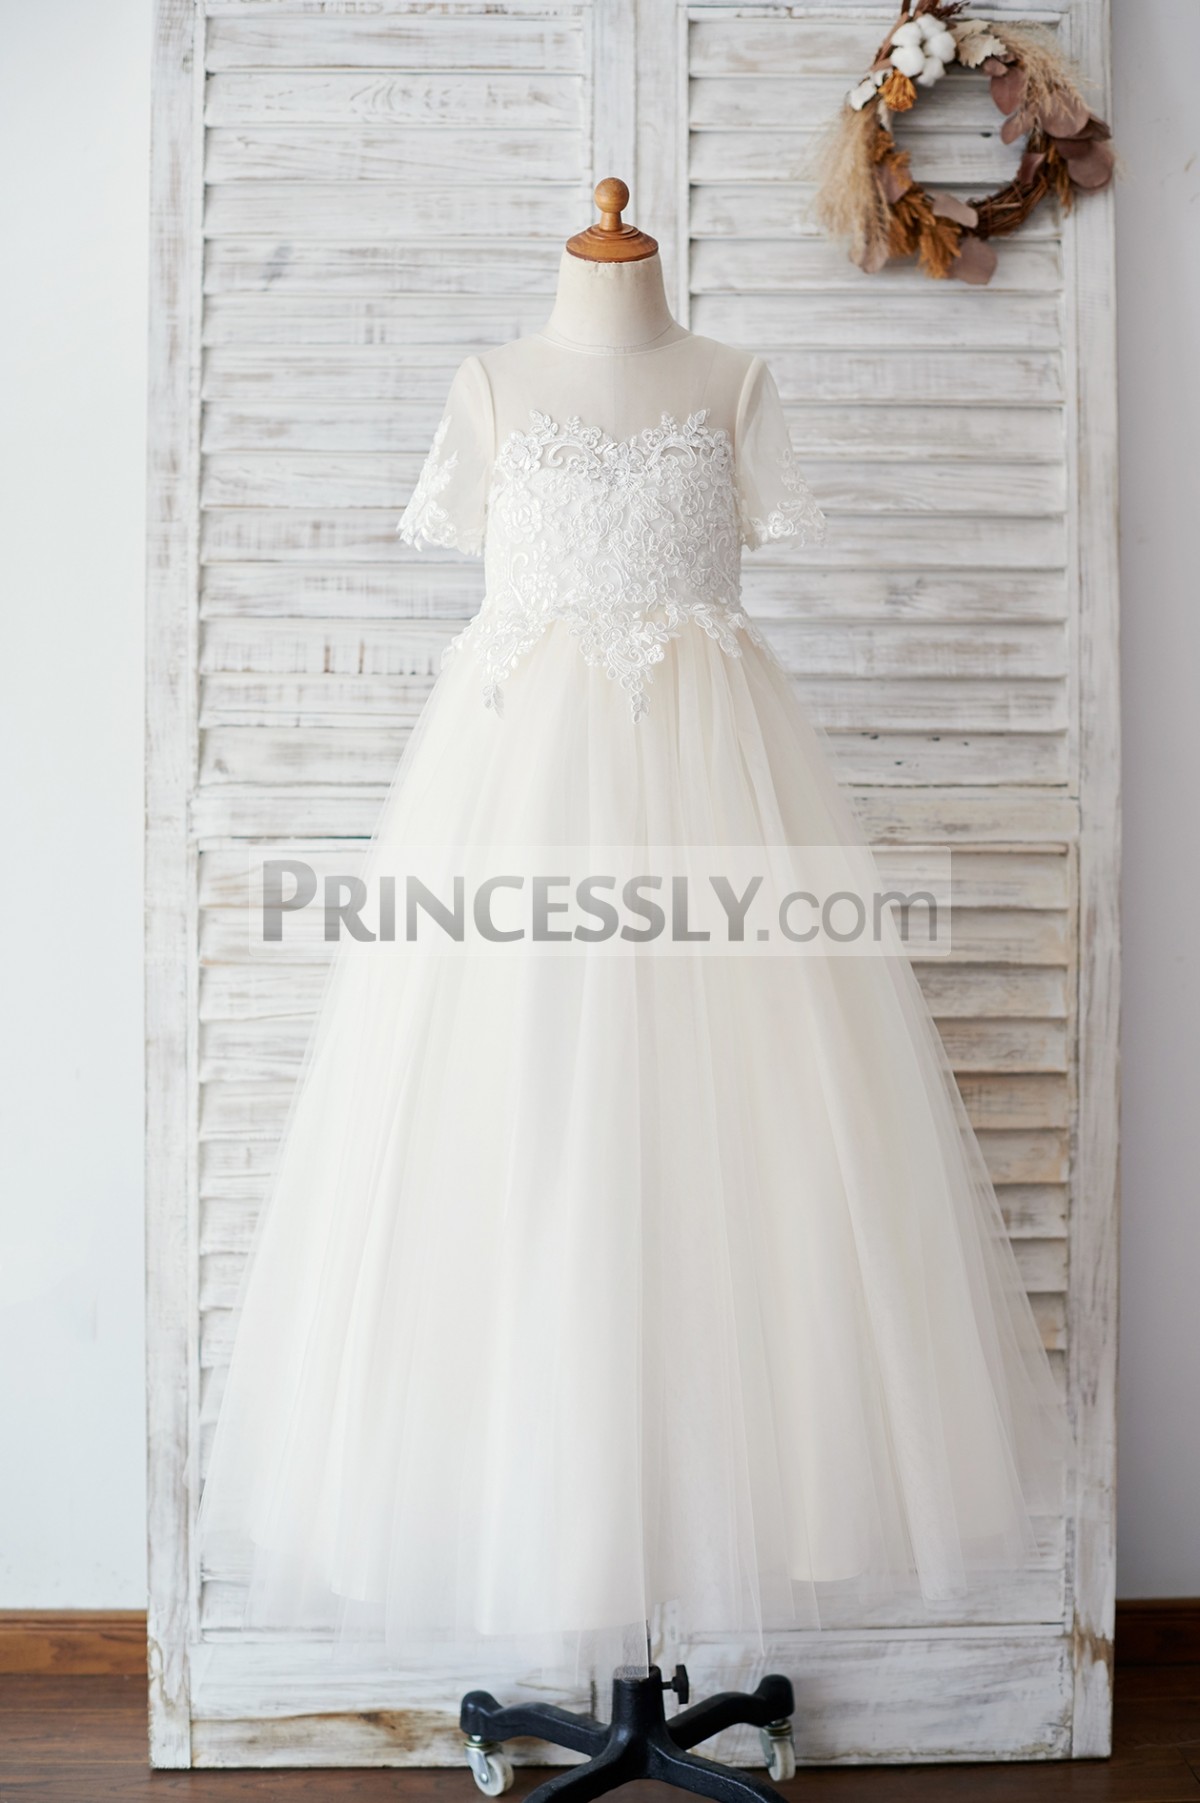 Princessly.com-K1003881-Ivory Lace Champagne Tulle Short Sleeves Wedding Flower Girl Dress-31